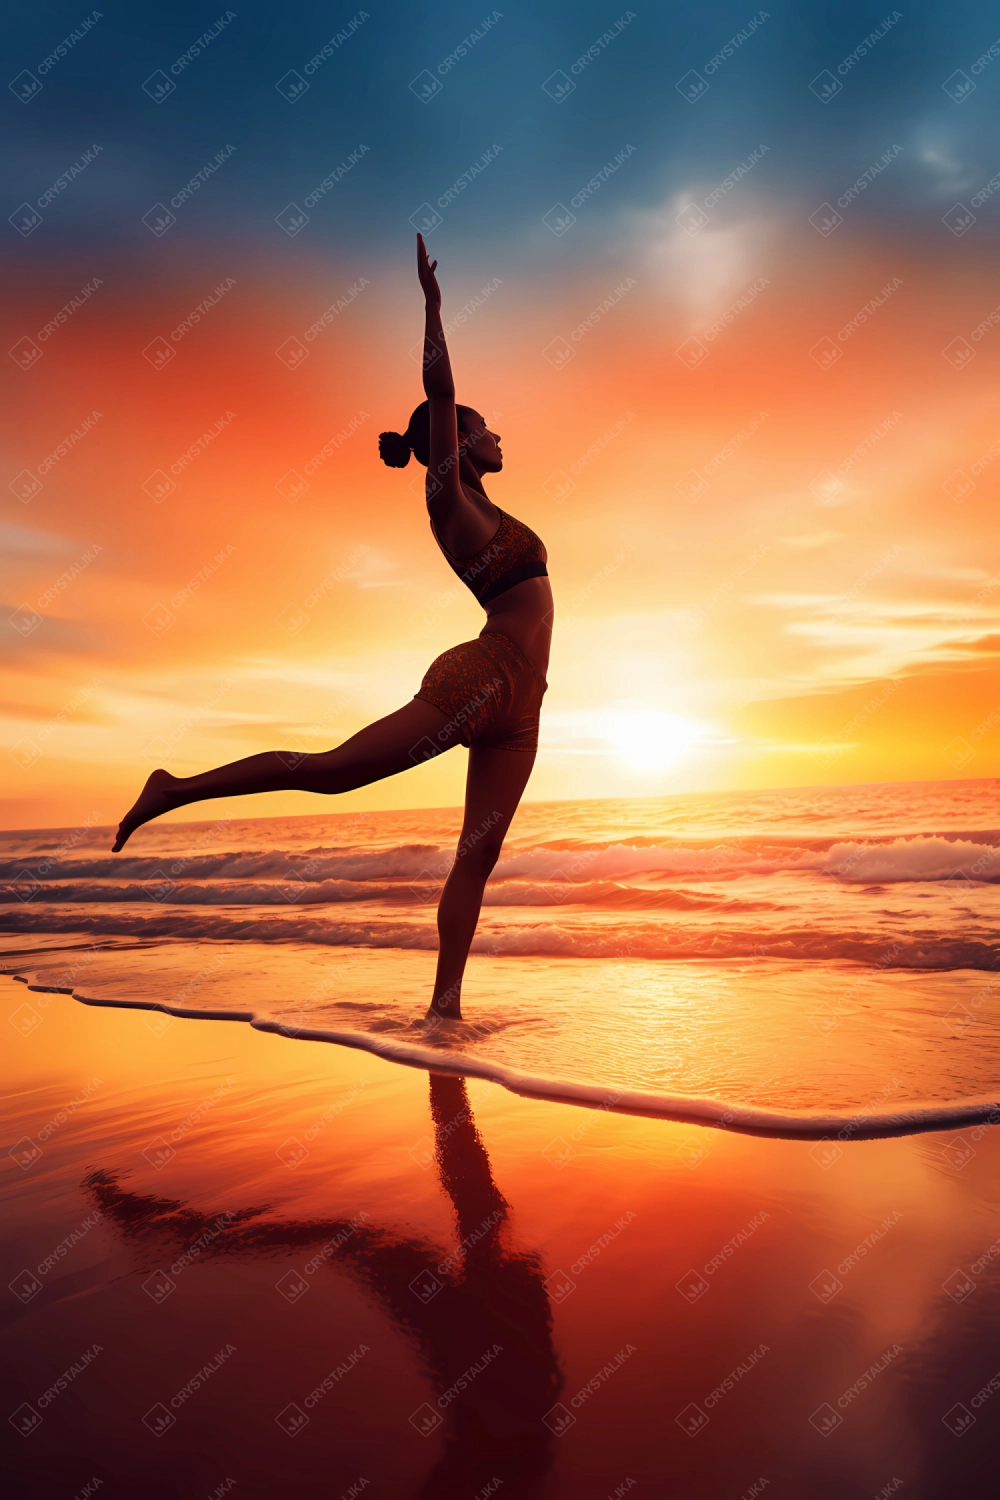 https://crystalika.com/img/45c750de/1432-young-girl-practising-yoga-on-a-beach-during-sunrise.webp